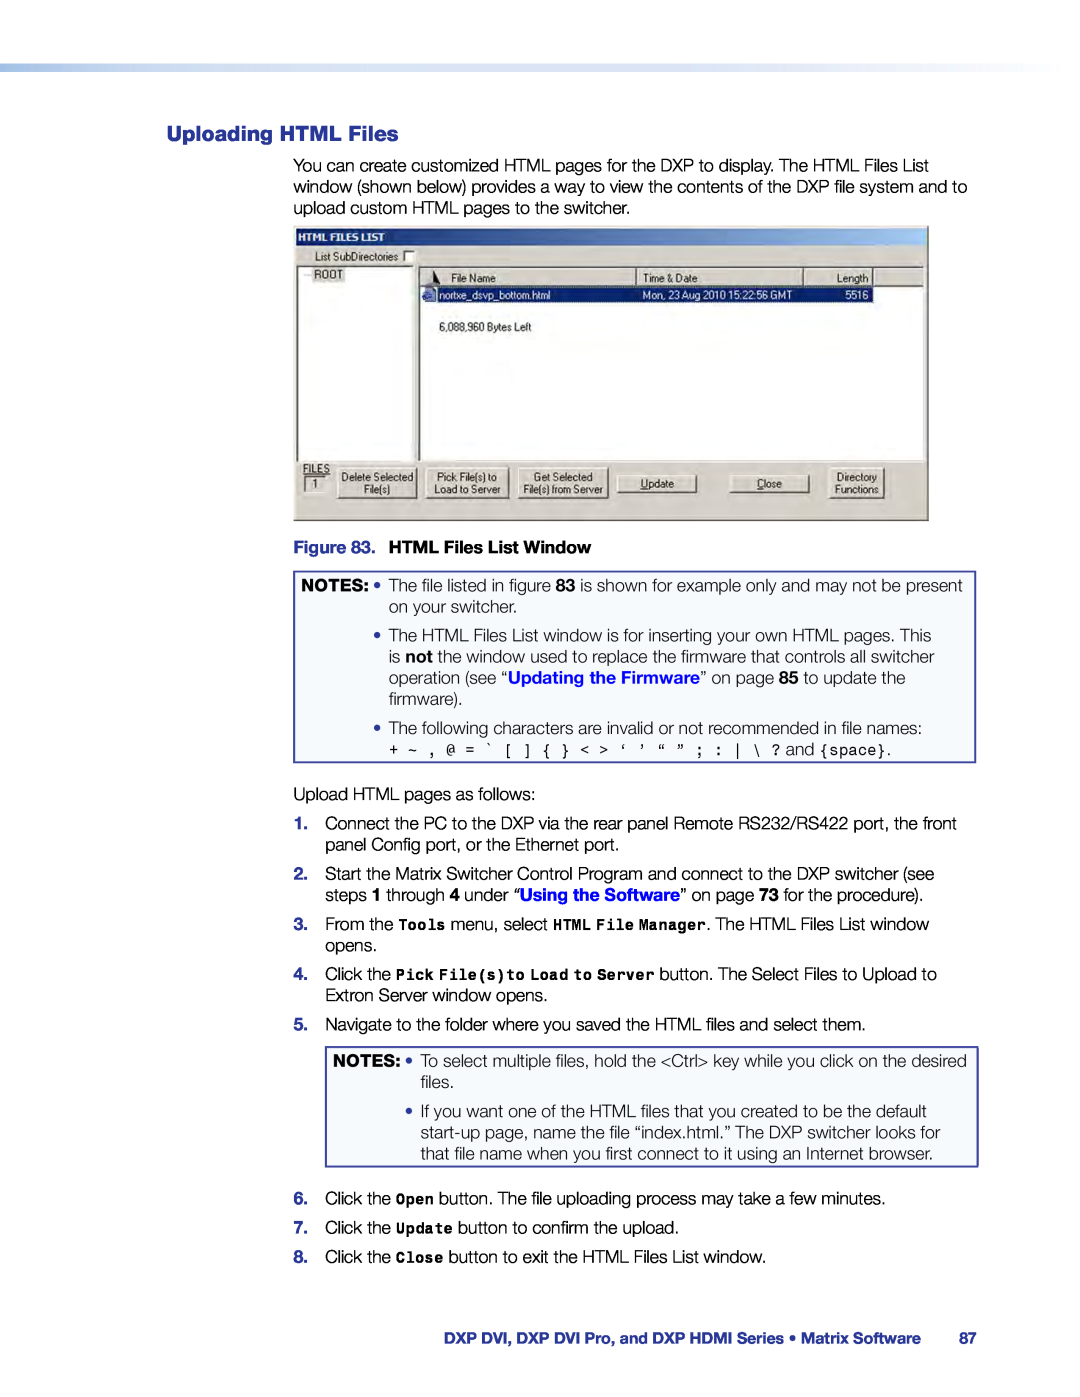 Extron electronic DXP DVI PRO manual Uploading HTML Files, HTML Files List Window 